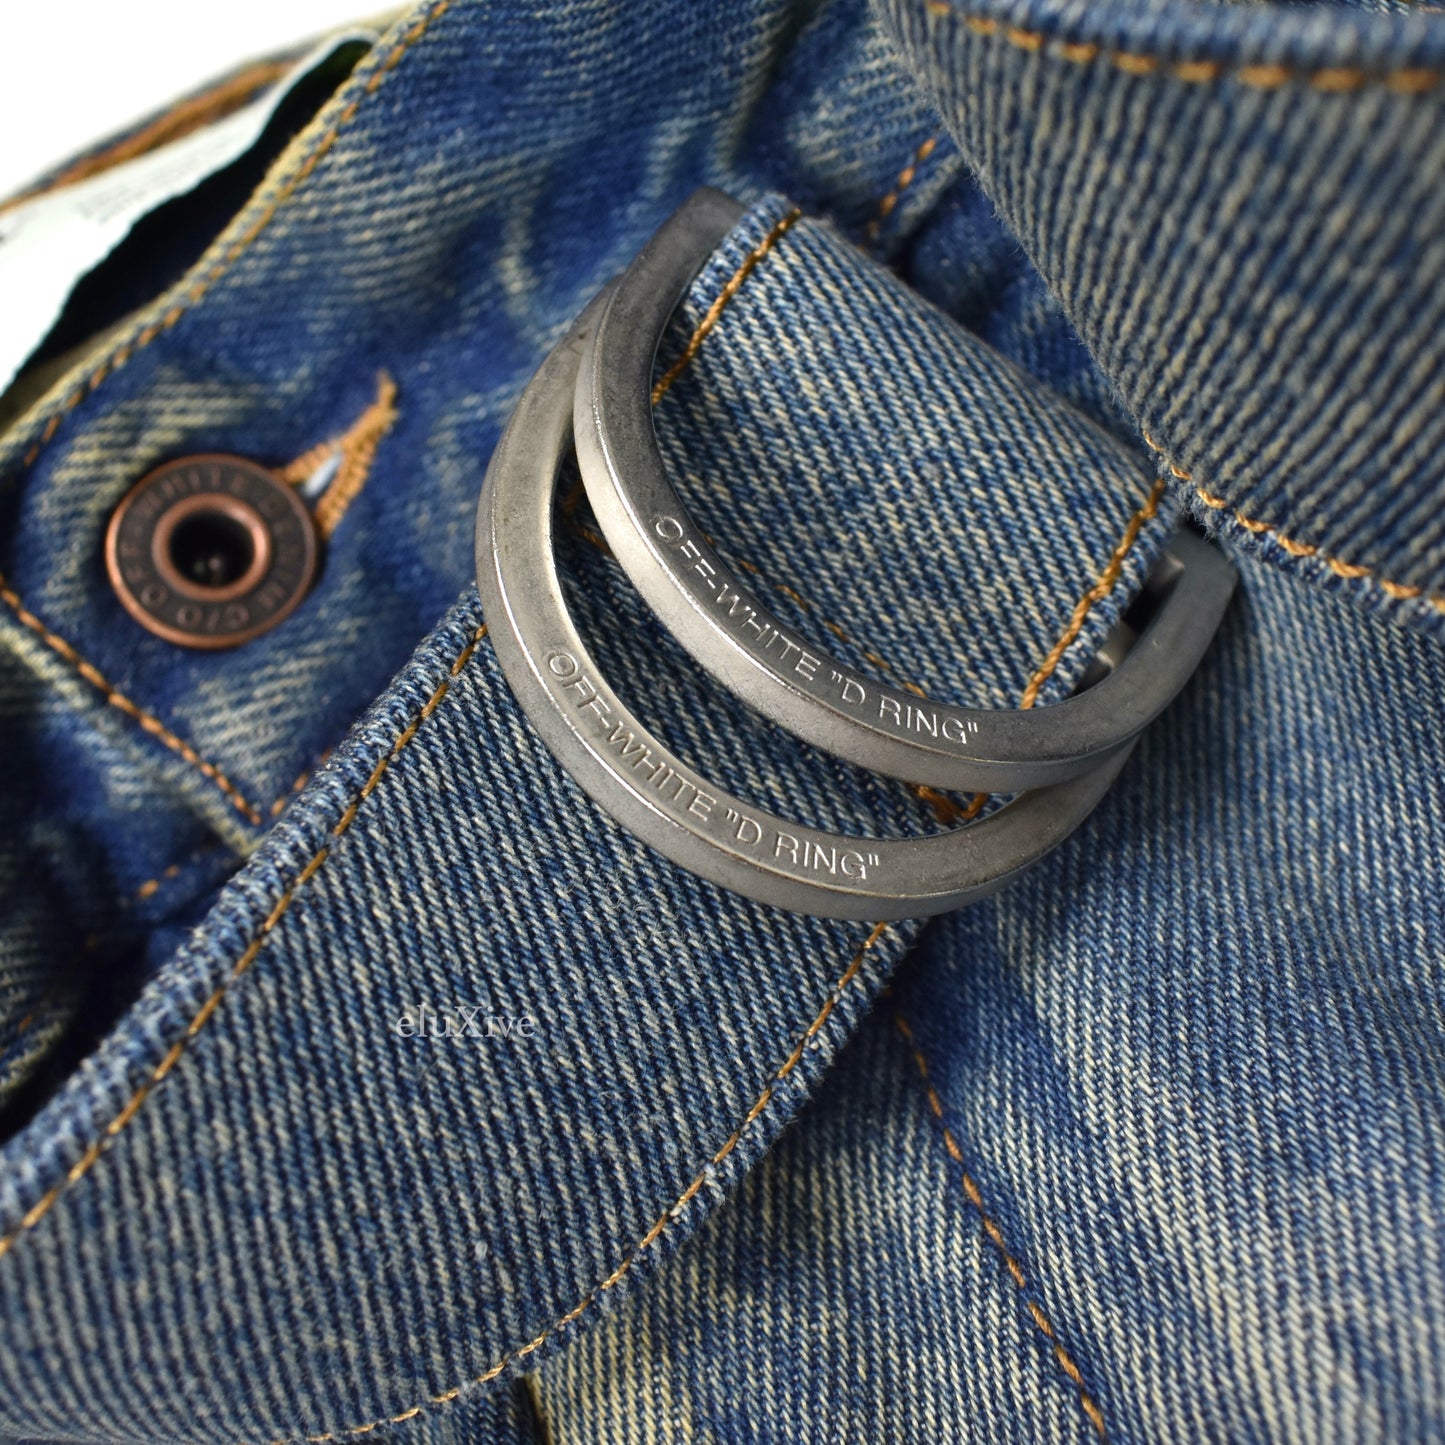 Off-White - Blue Distressed Paint Splatter Belted Denim Jeans